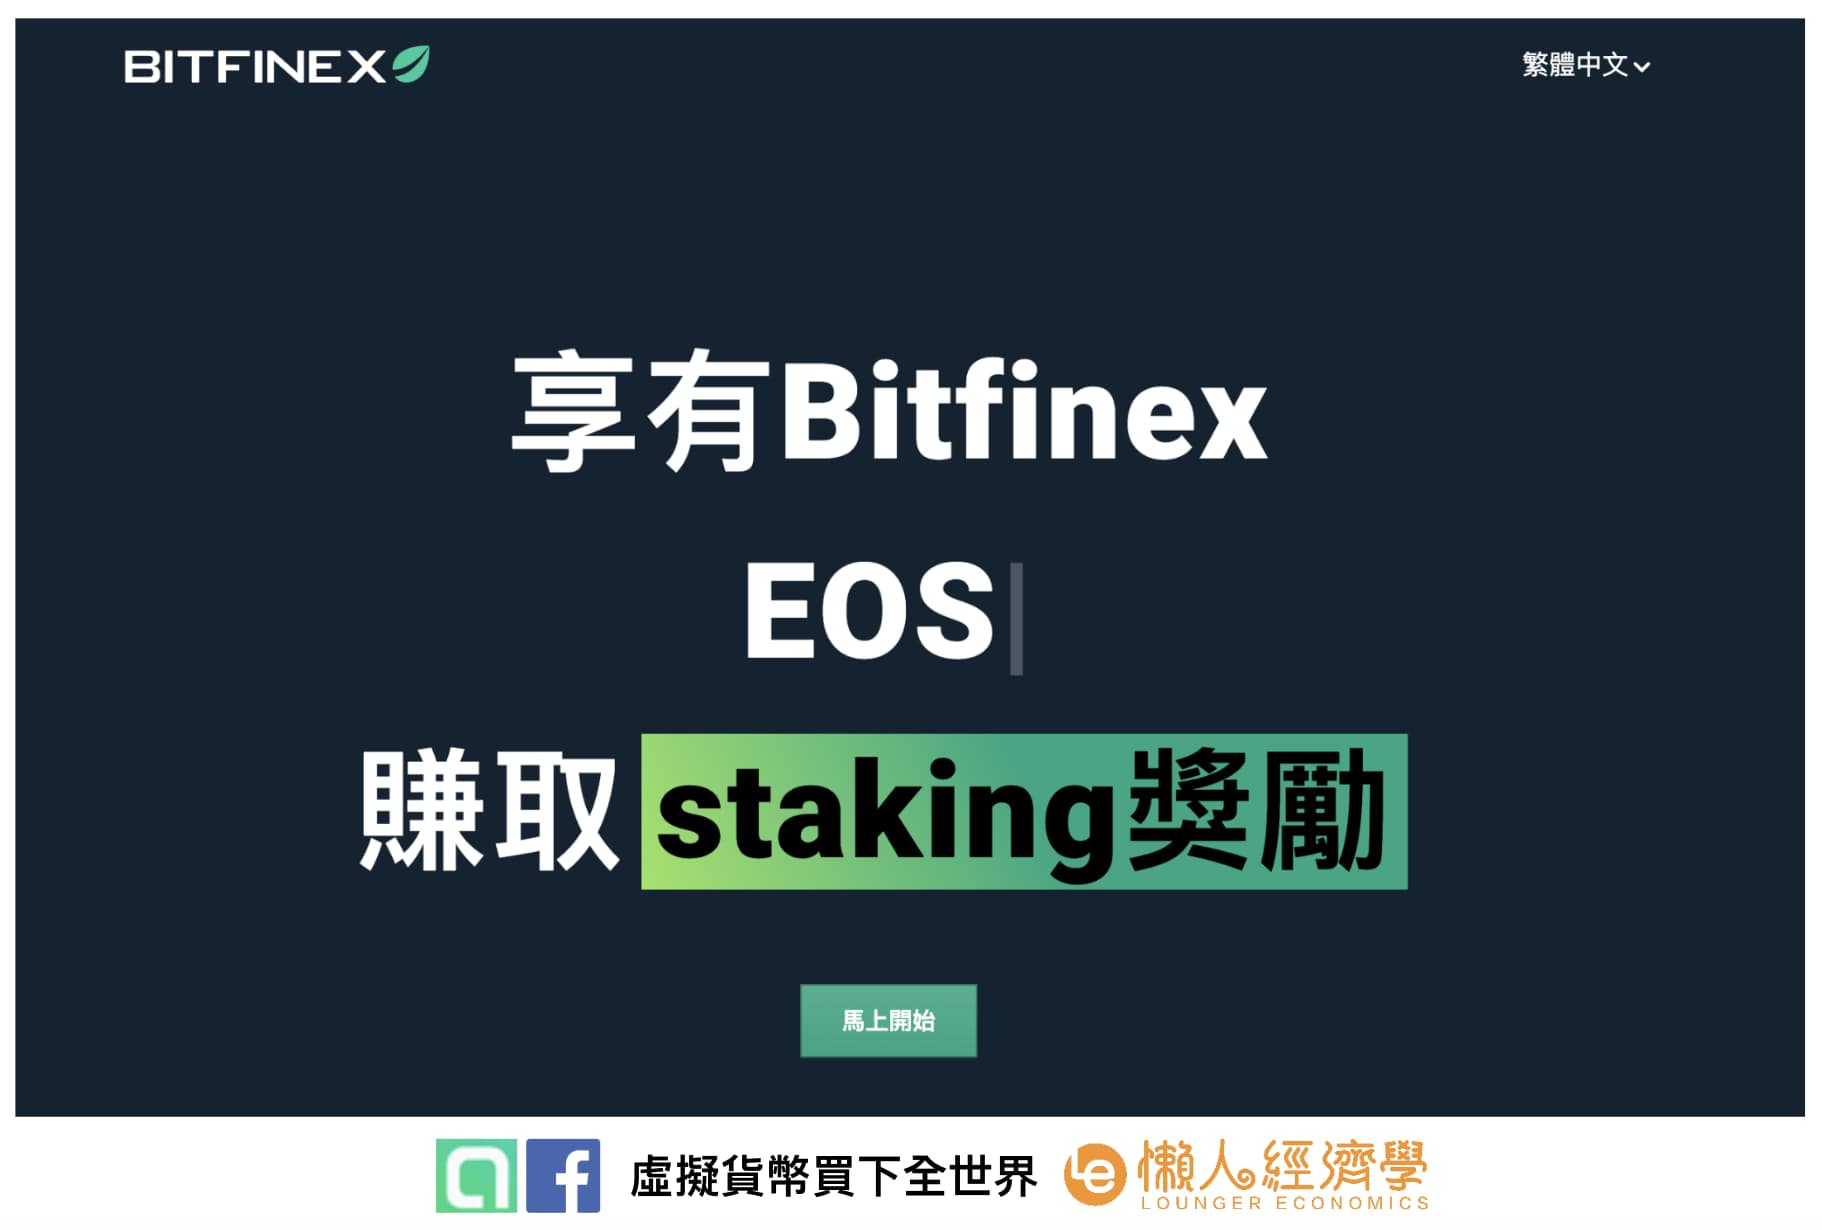 Bitfinex Staking 功能優點及特色